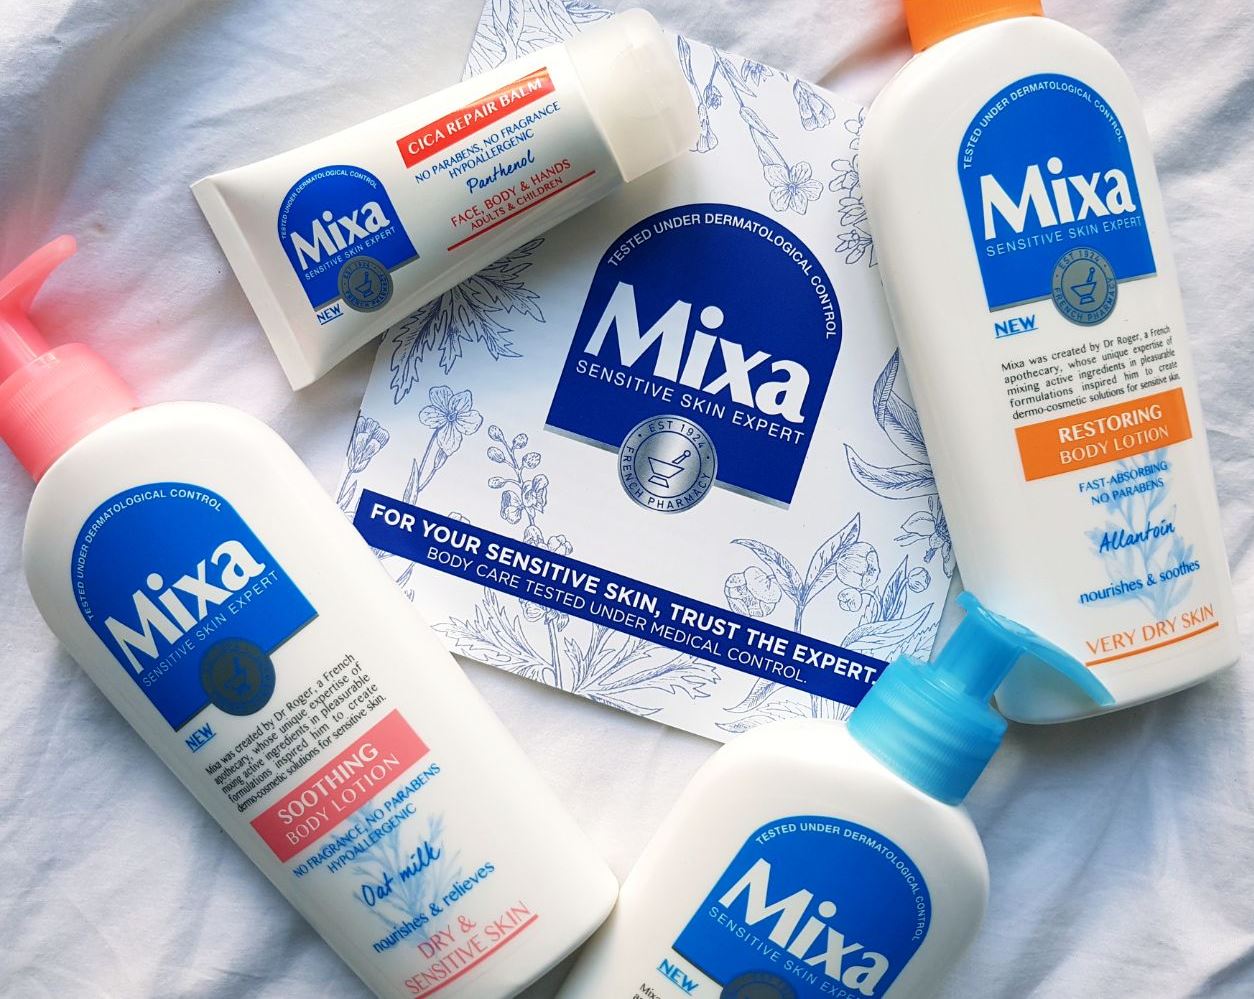 Mixa The Sensitive Skin Expert is here!